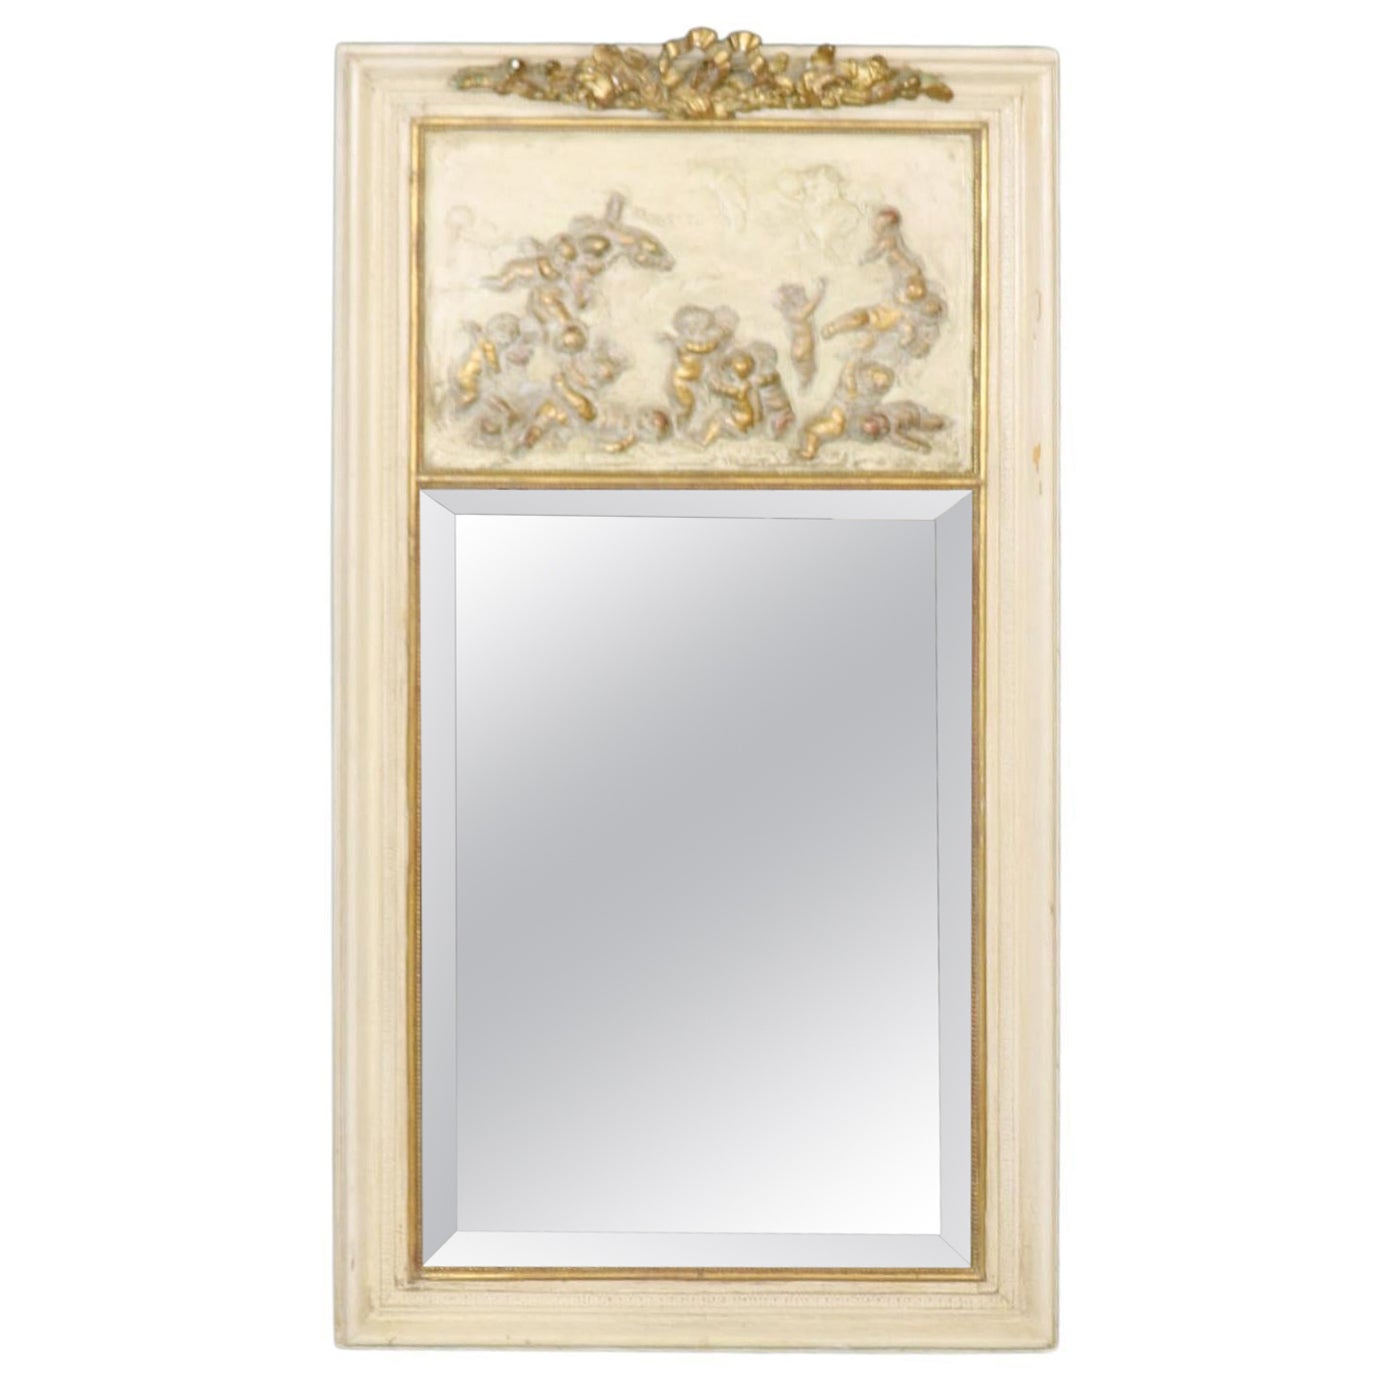 Rare Antique French White and Gold Gilded Carved Cherub Putti Mirror Circa 1900 For Sale